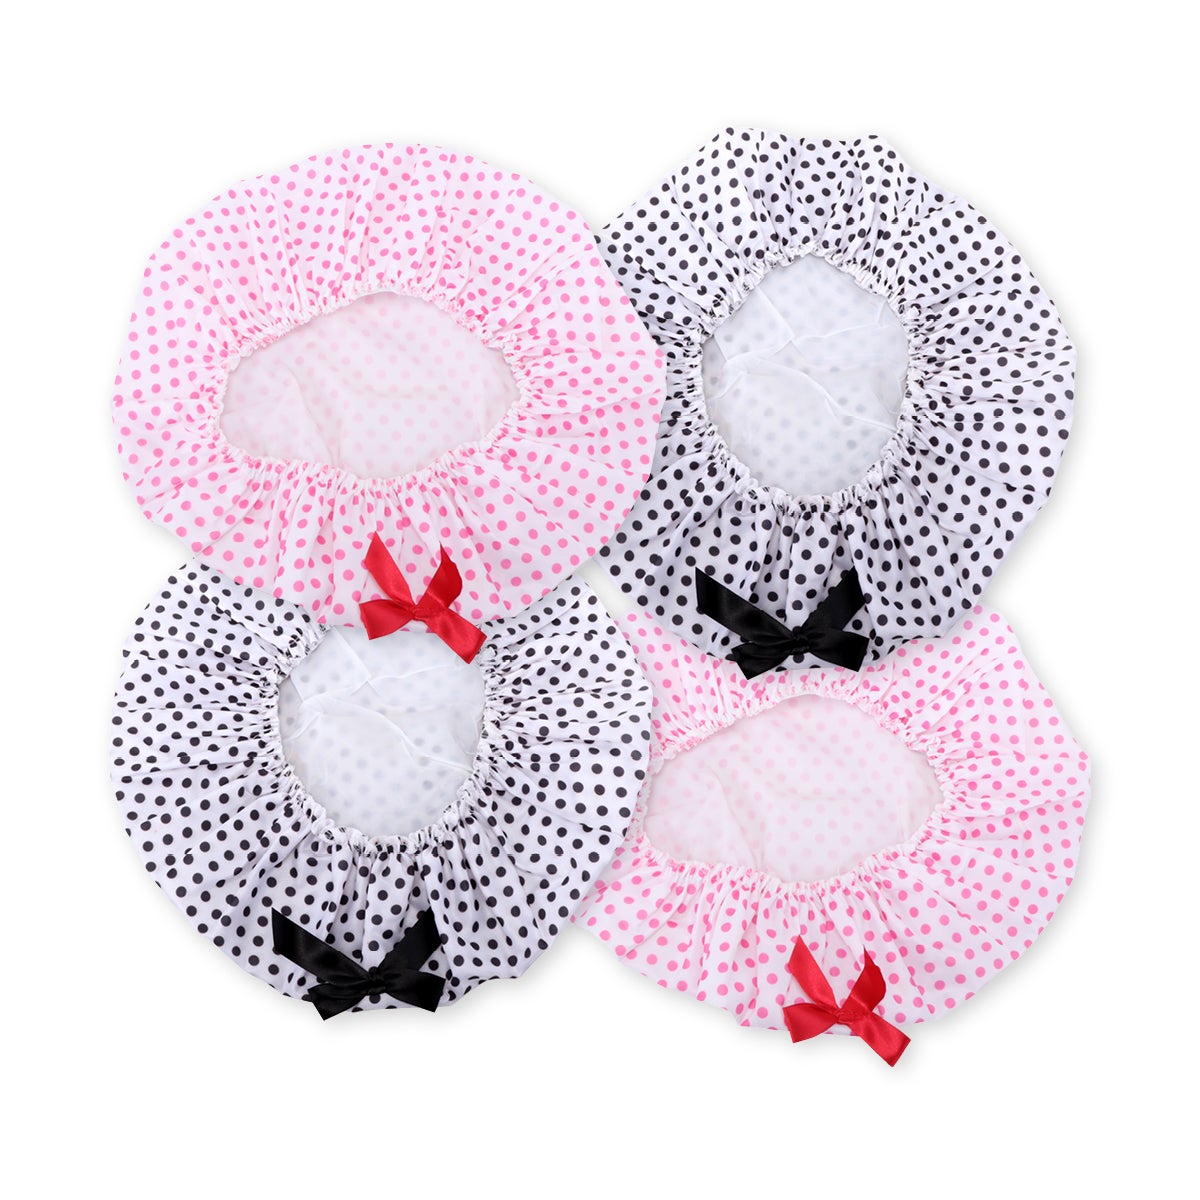 Swosh® 4PK Shower Cap Jumbo Size Polka Dot Design Thick Comfortable Material 